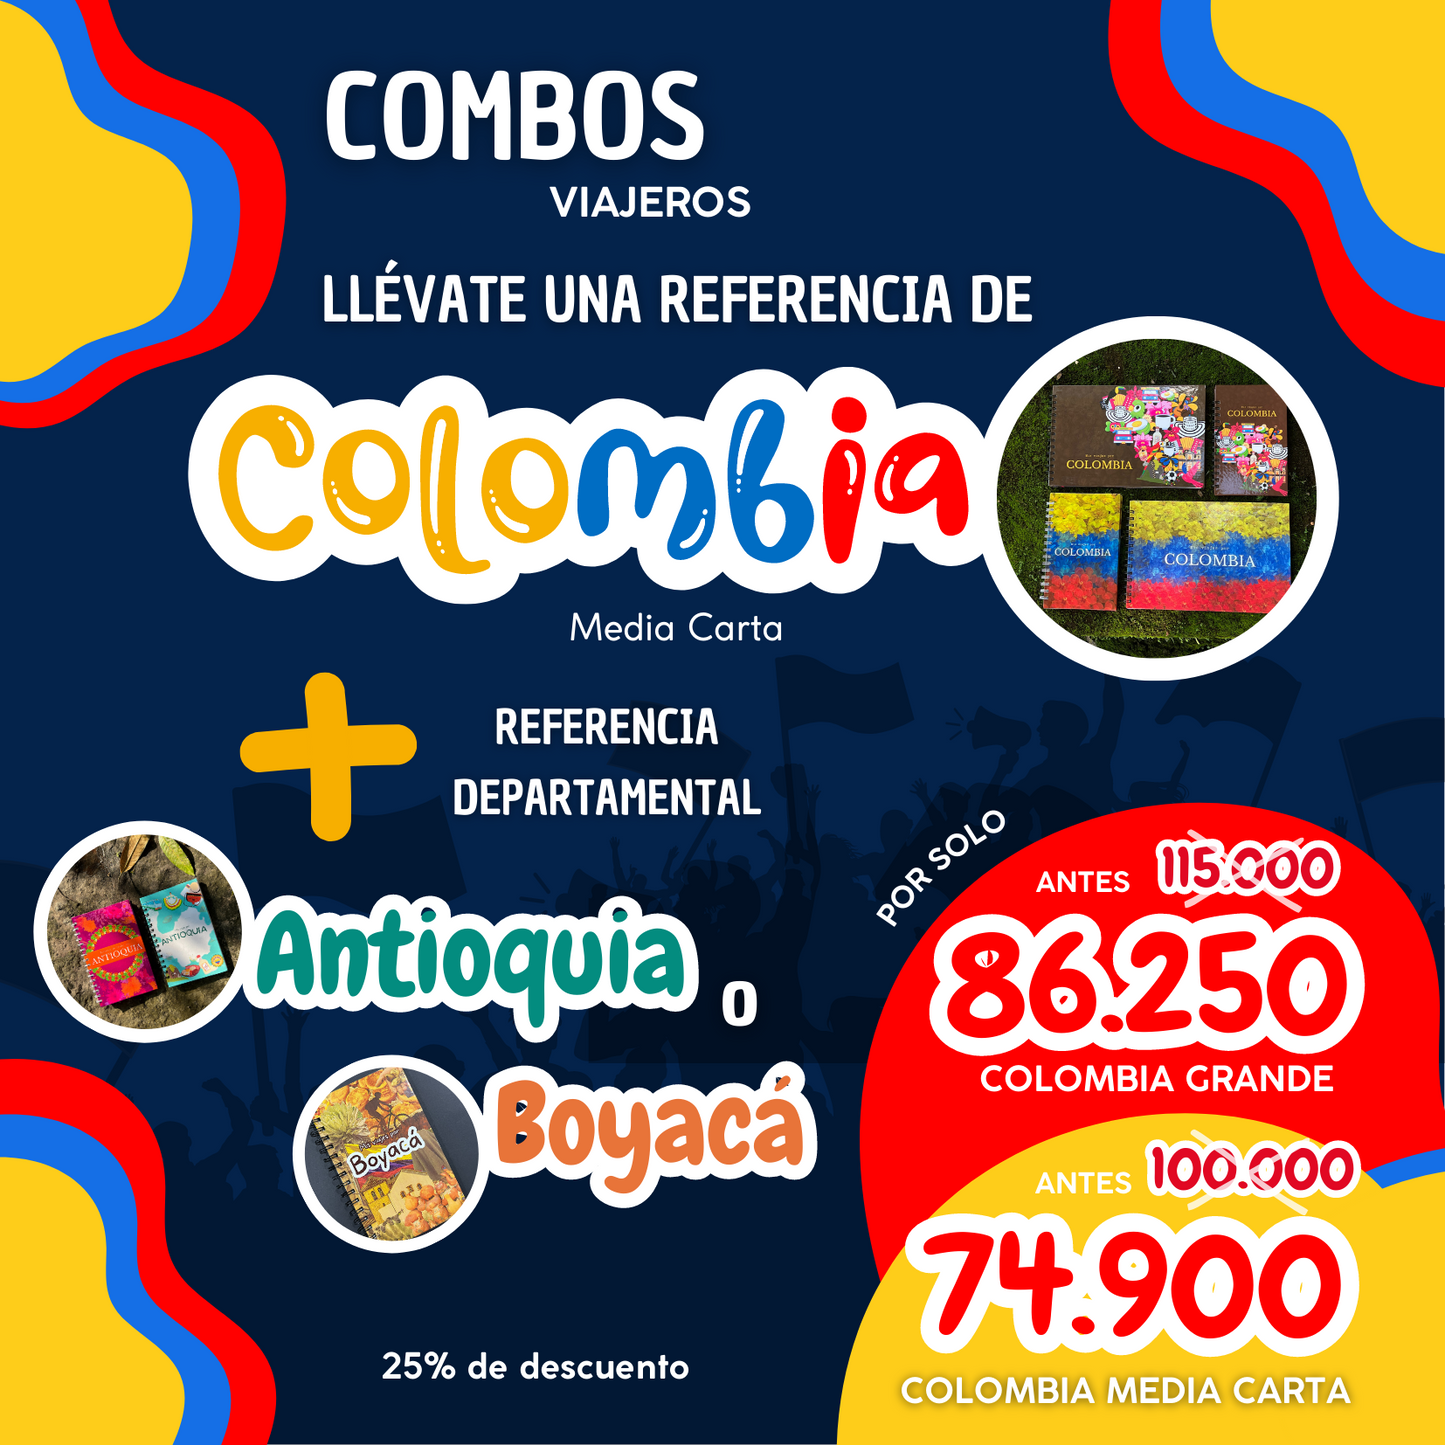 Combos Viajeros COLOMBIA